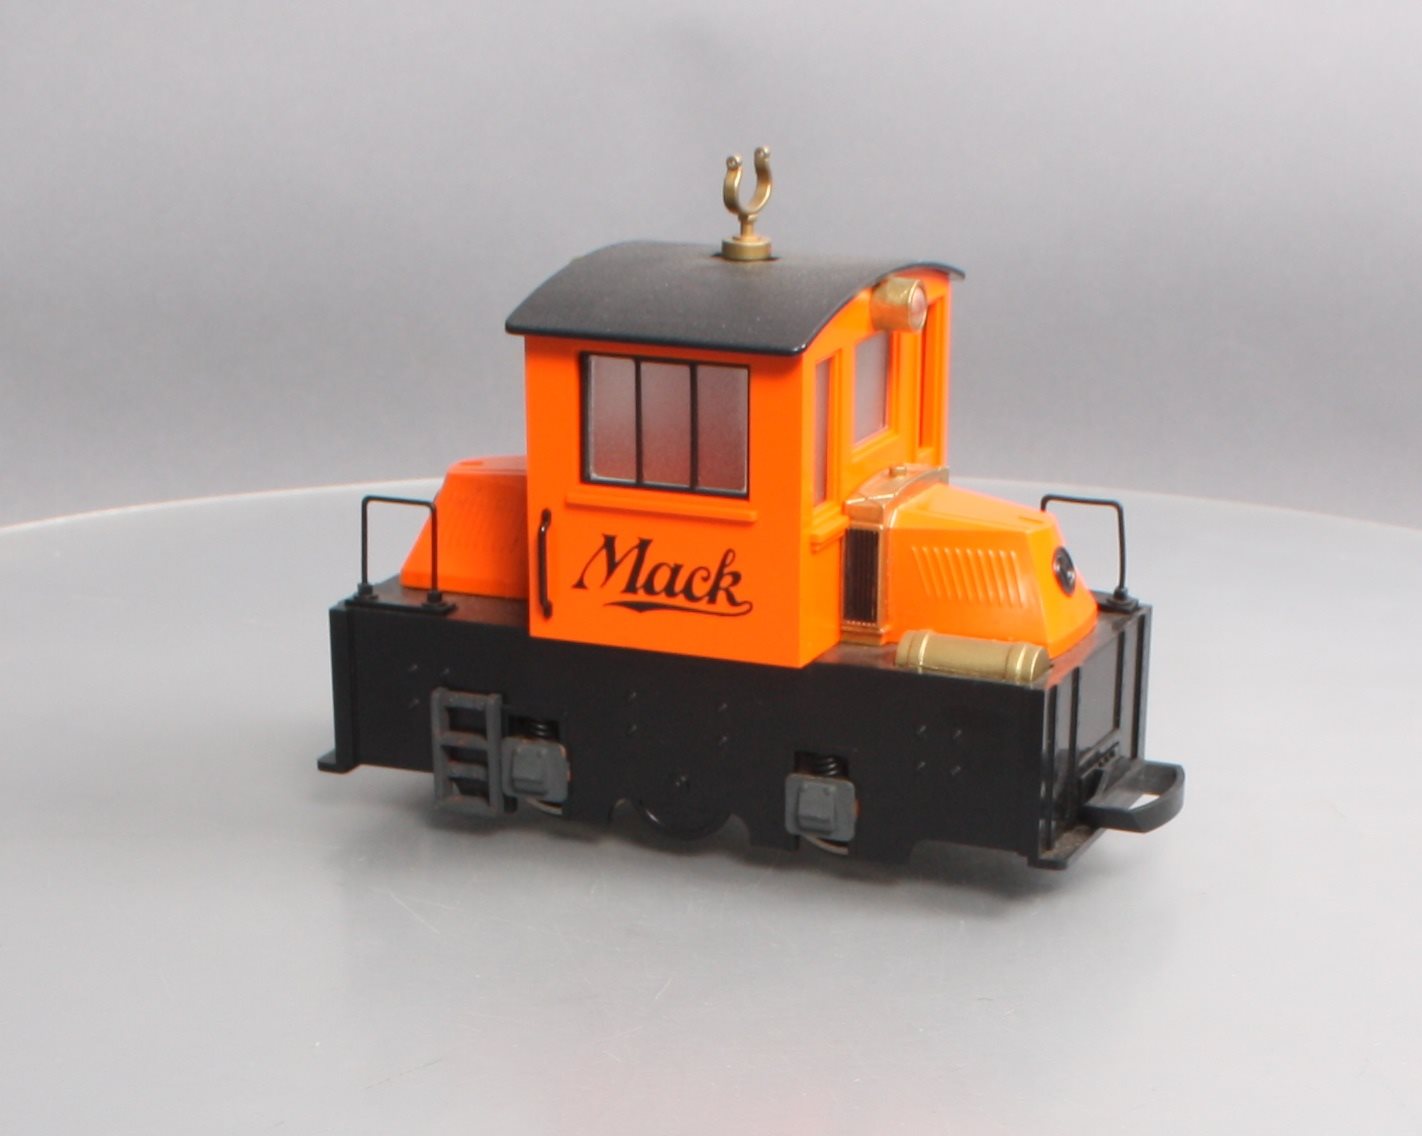 Hartland 09707 G Mighty Mack Engine, Orange